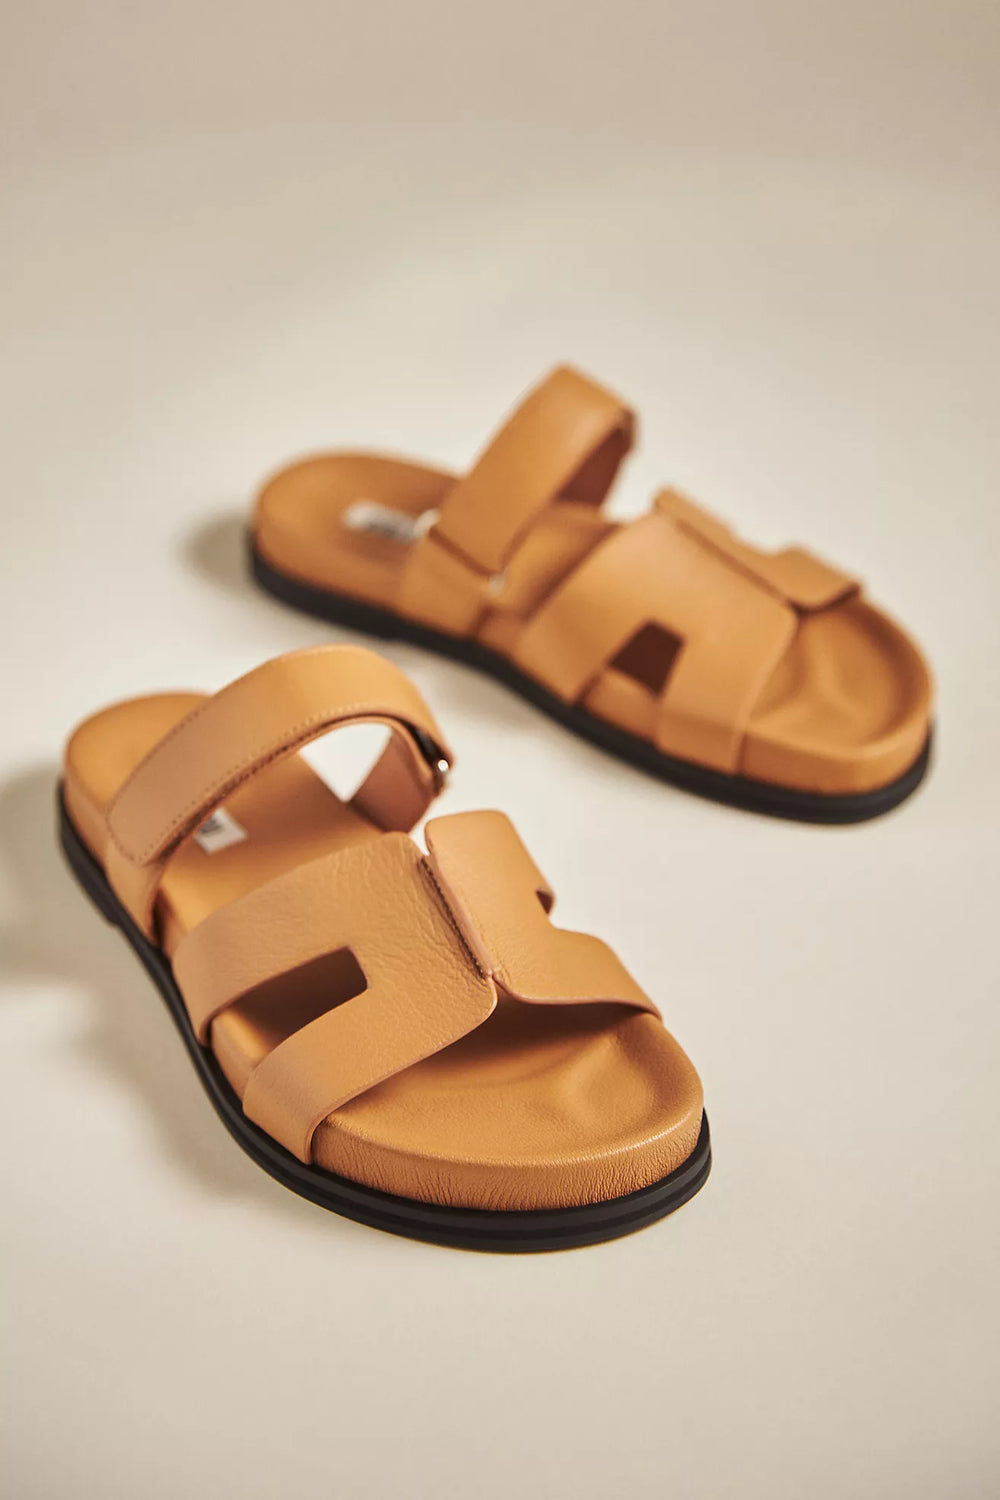 QC for Hermes Oran Sandals : r/RepladiesDesigner